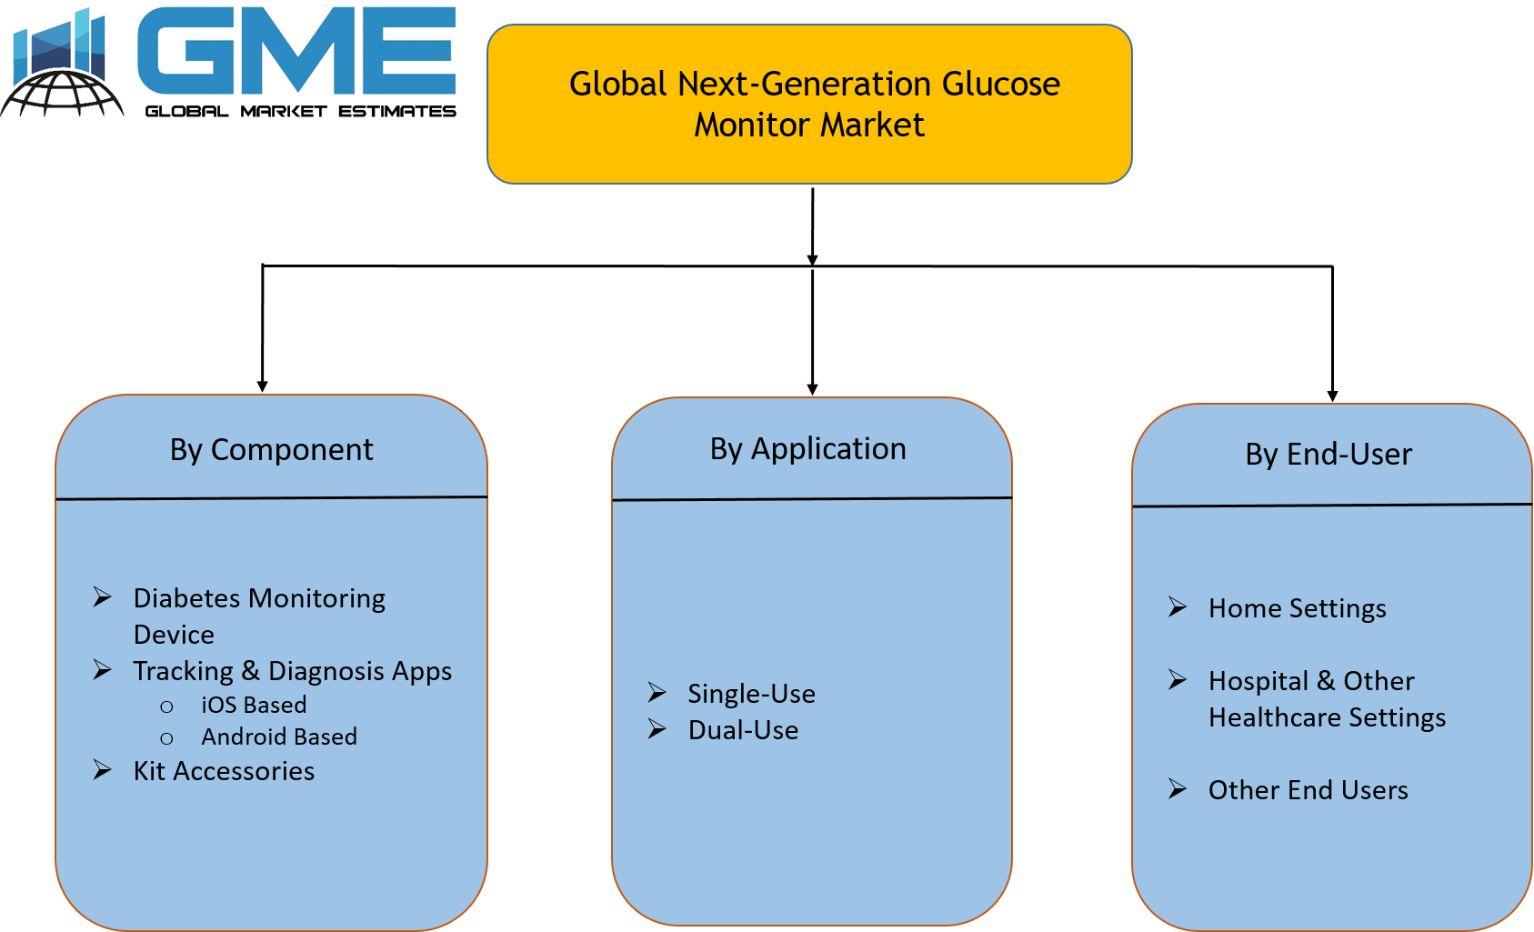 Global Next-Generation Glucose Monitor Market Segmentation